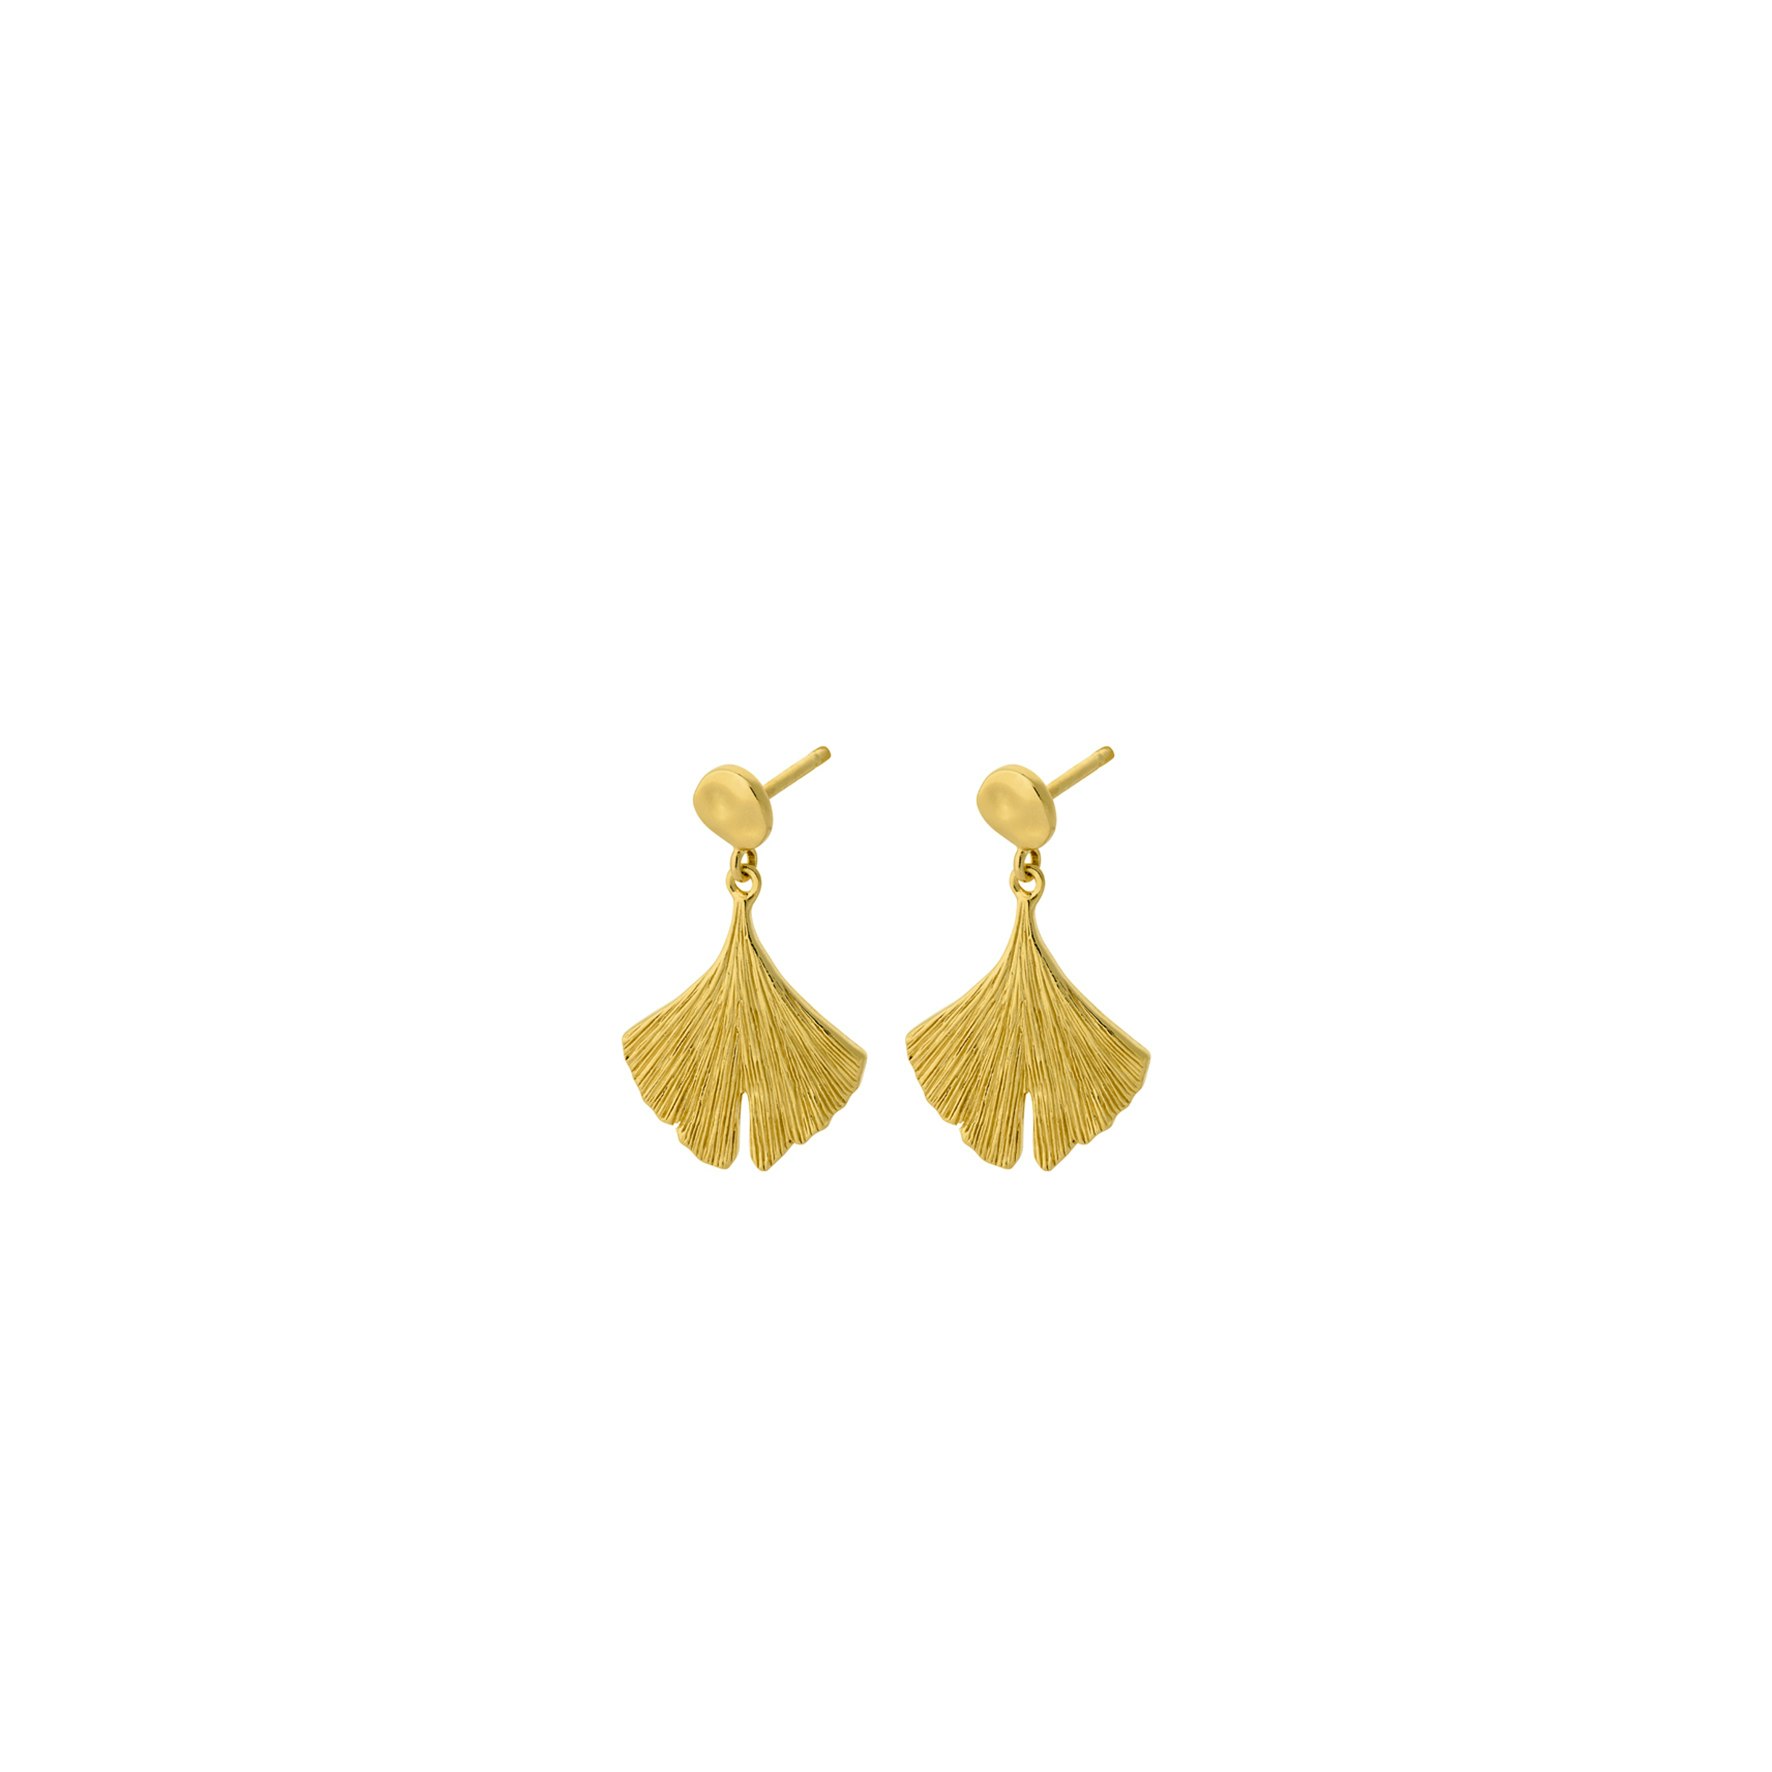 Biloba Earrings from Pernille Corydon in Goldplated-Silver Sterling 925